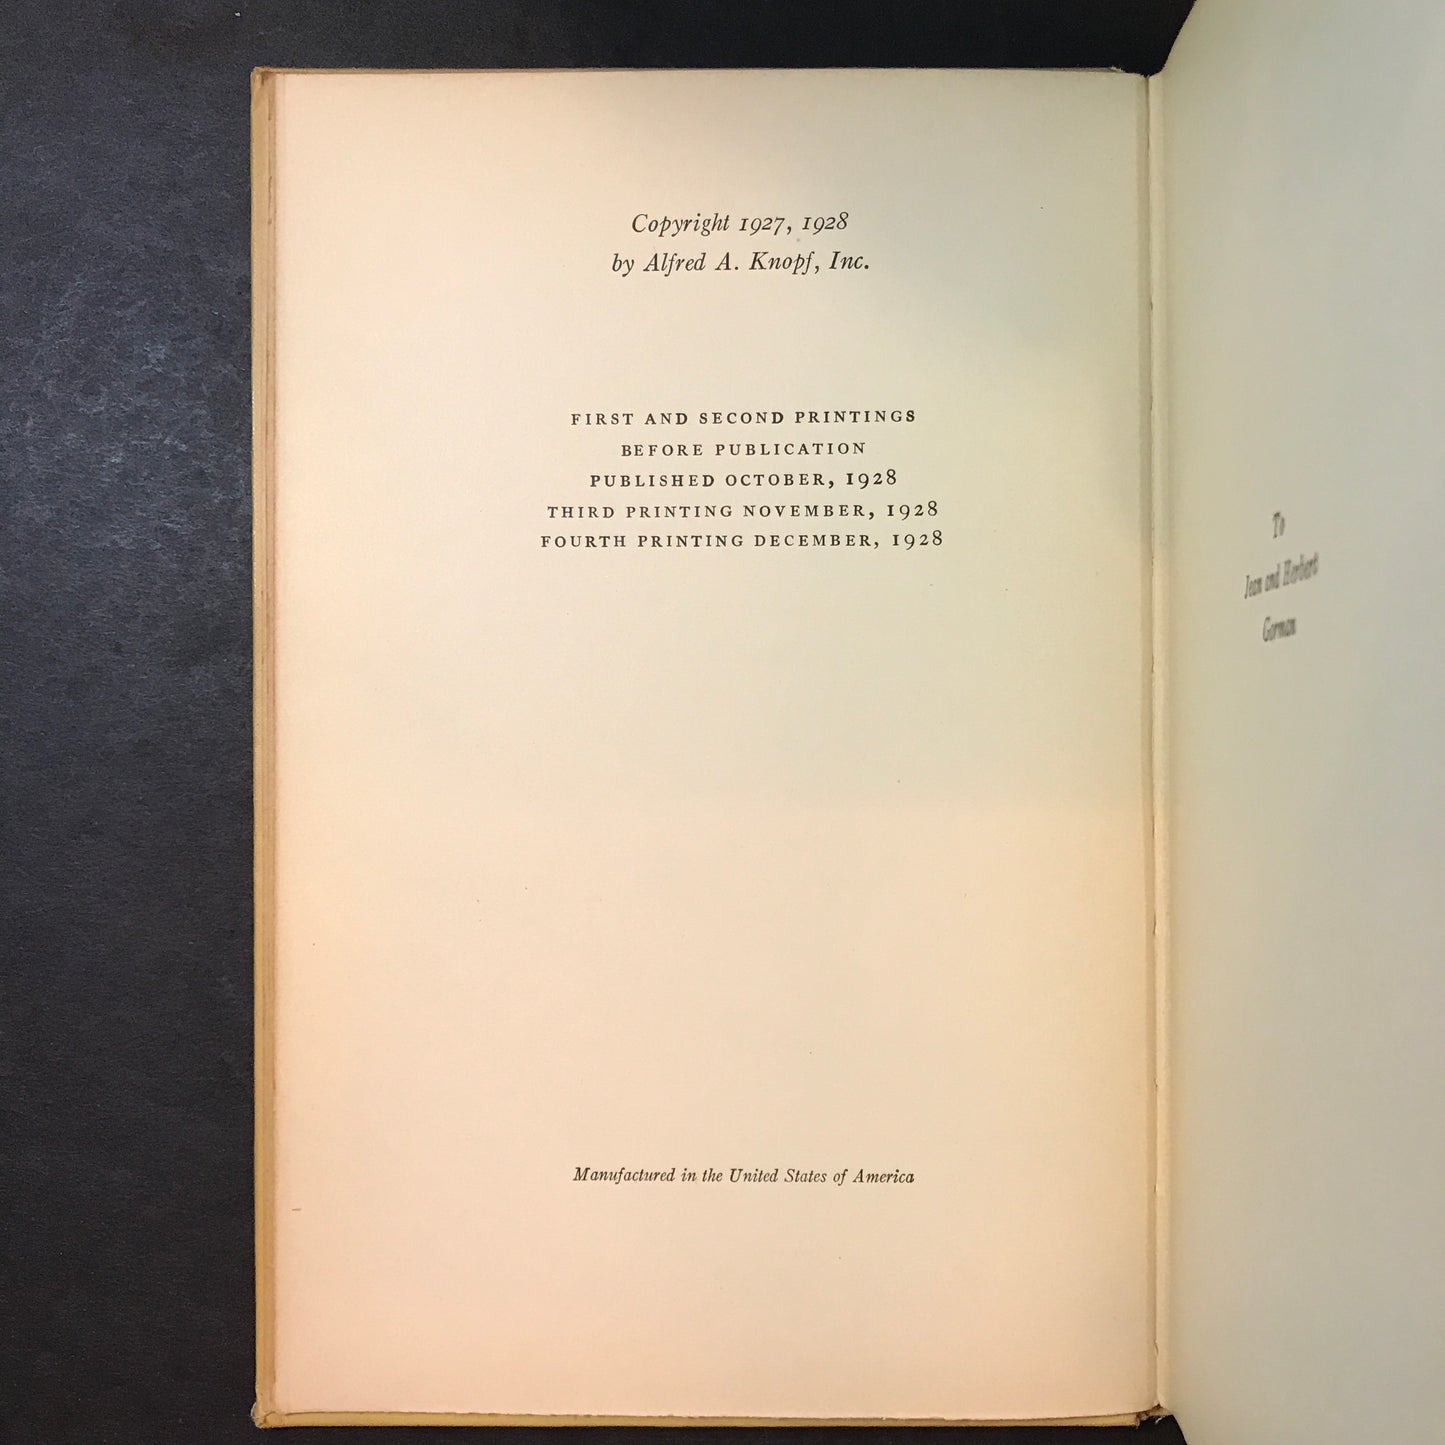 The Bon Vivant's Companion or How To Mix Drinks - Professor Jerry Thomas - 4th Print - 1928